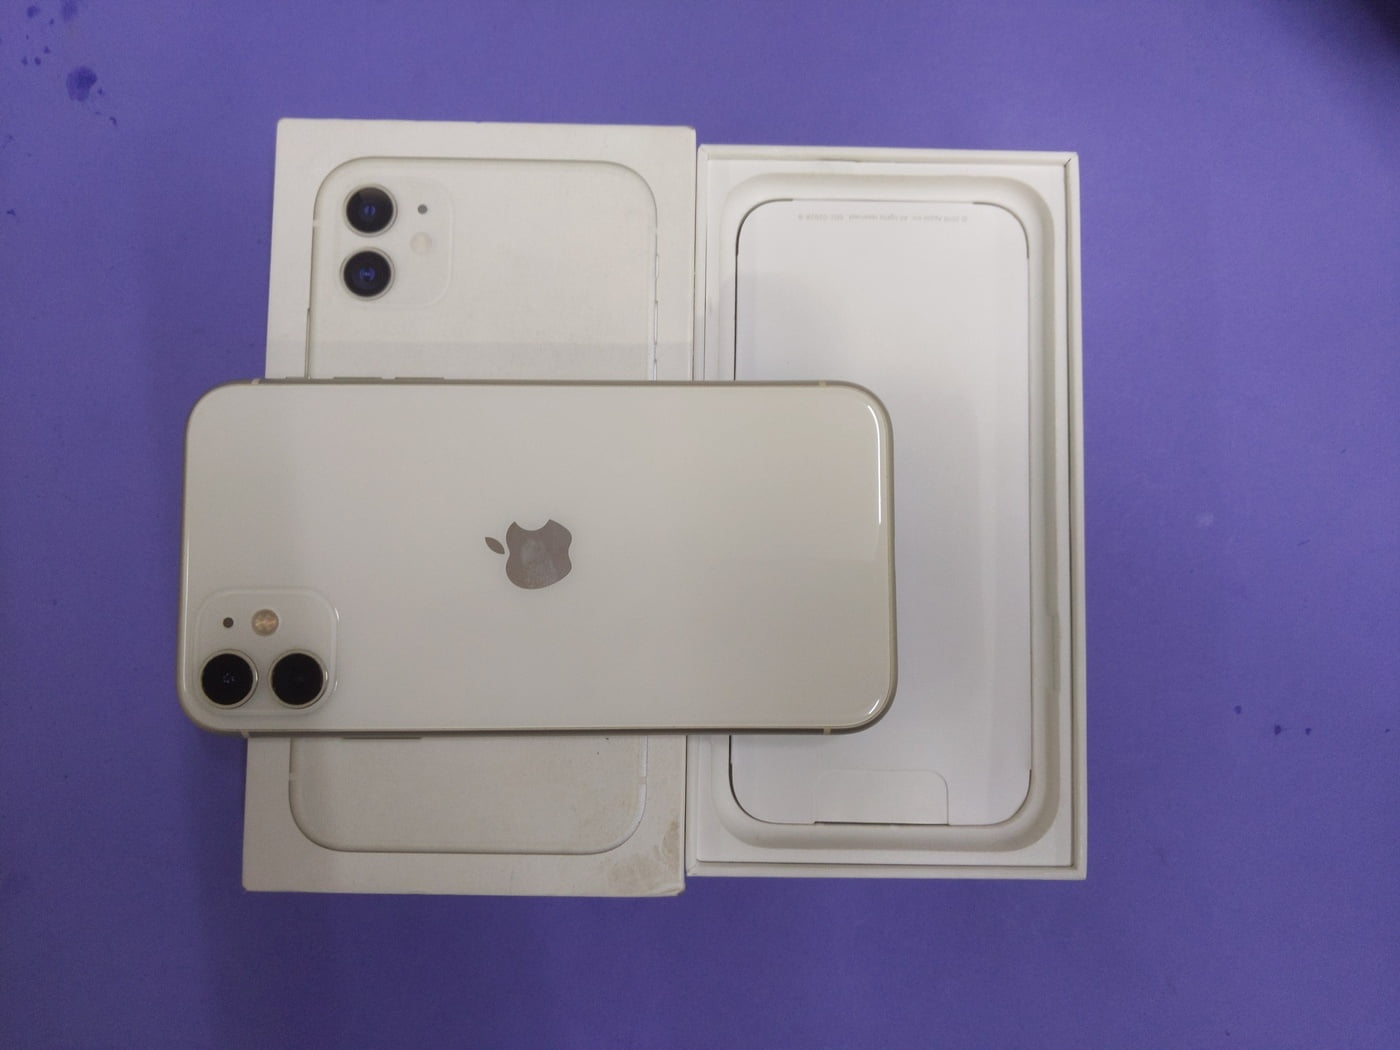 iPhone 11 64GB White - Refurbished product